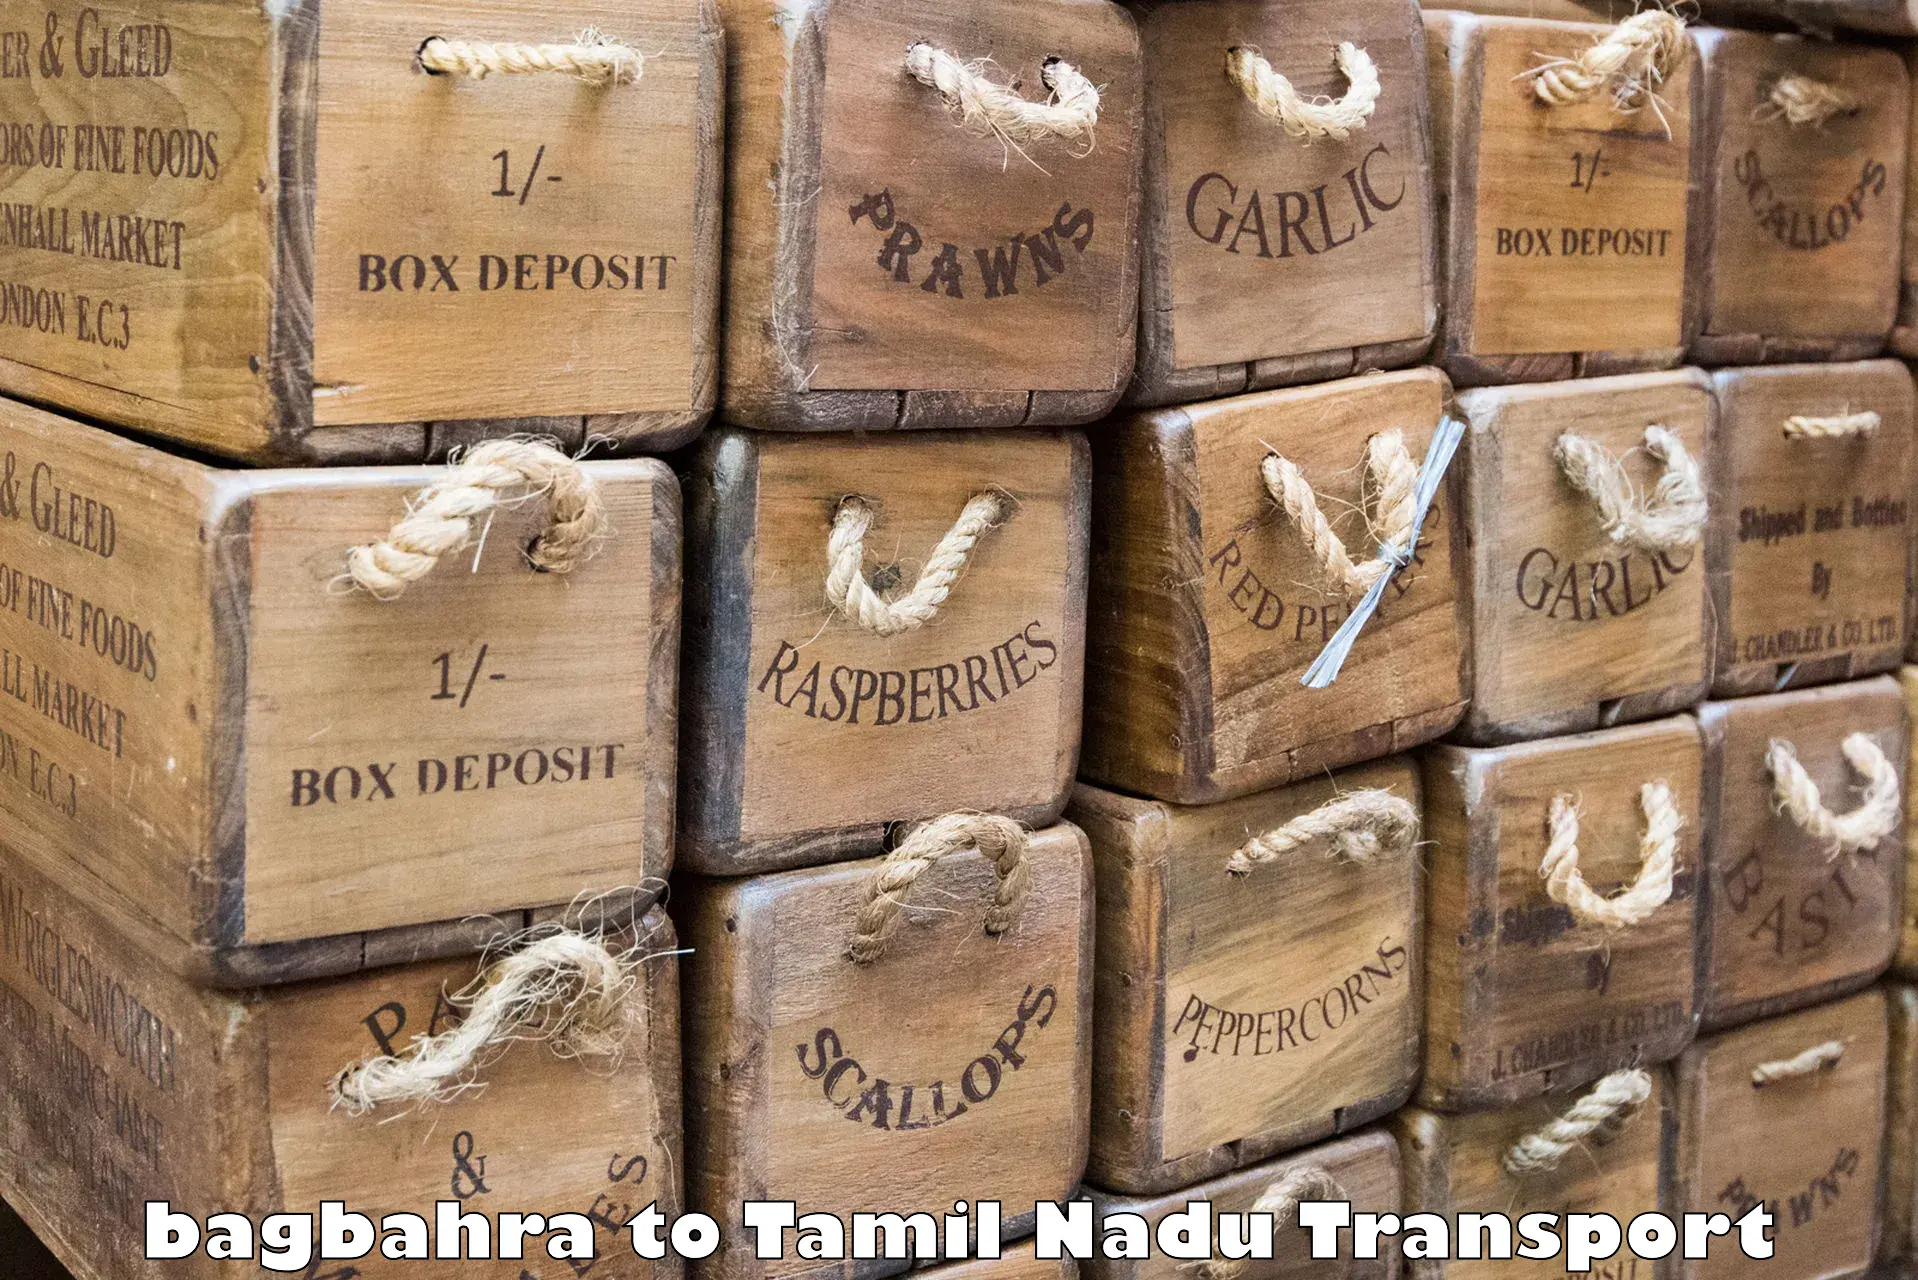 Nearby transport service bagbahra to Tambaram